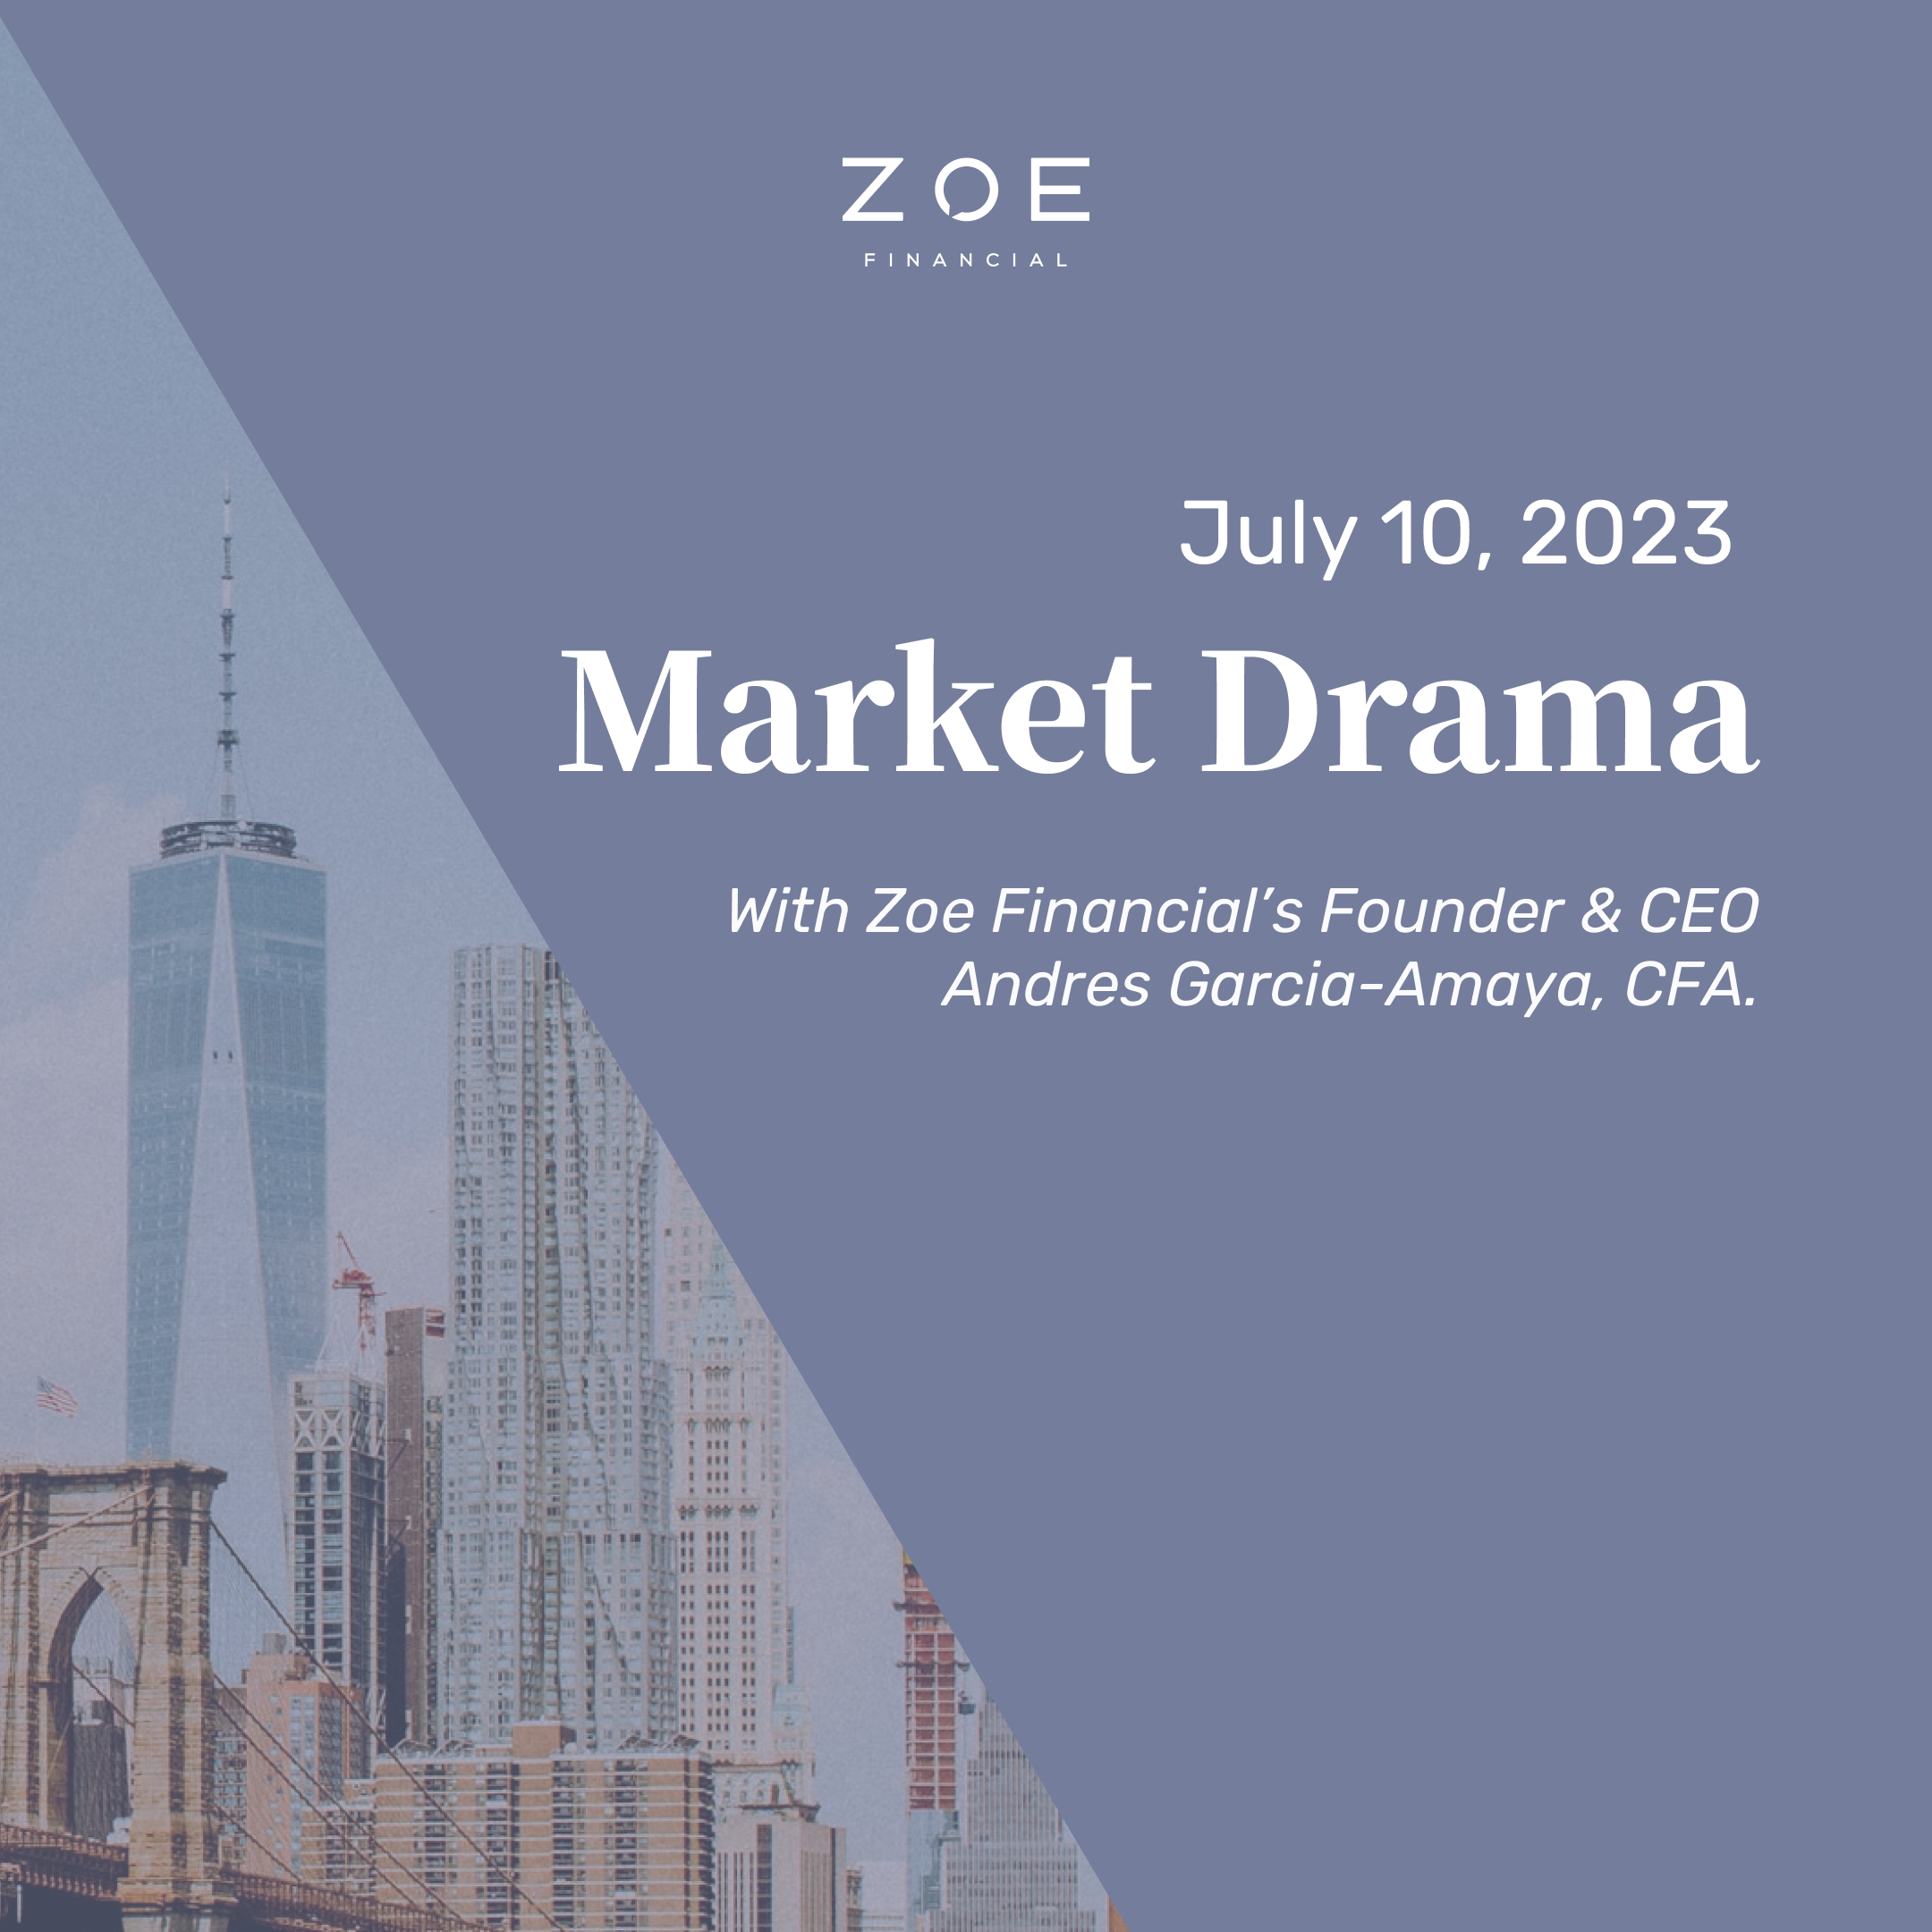 Market Drama July 10, 2023 - Zoe Financial